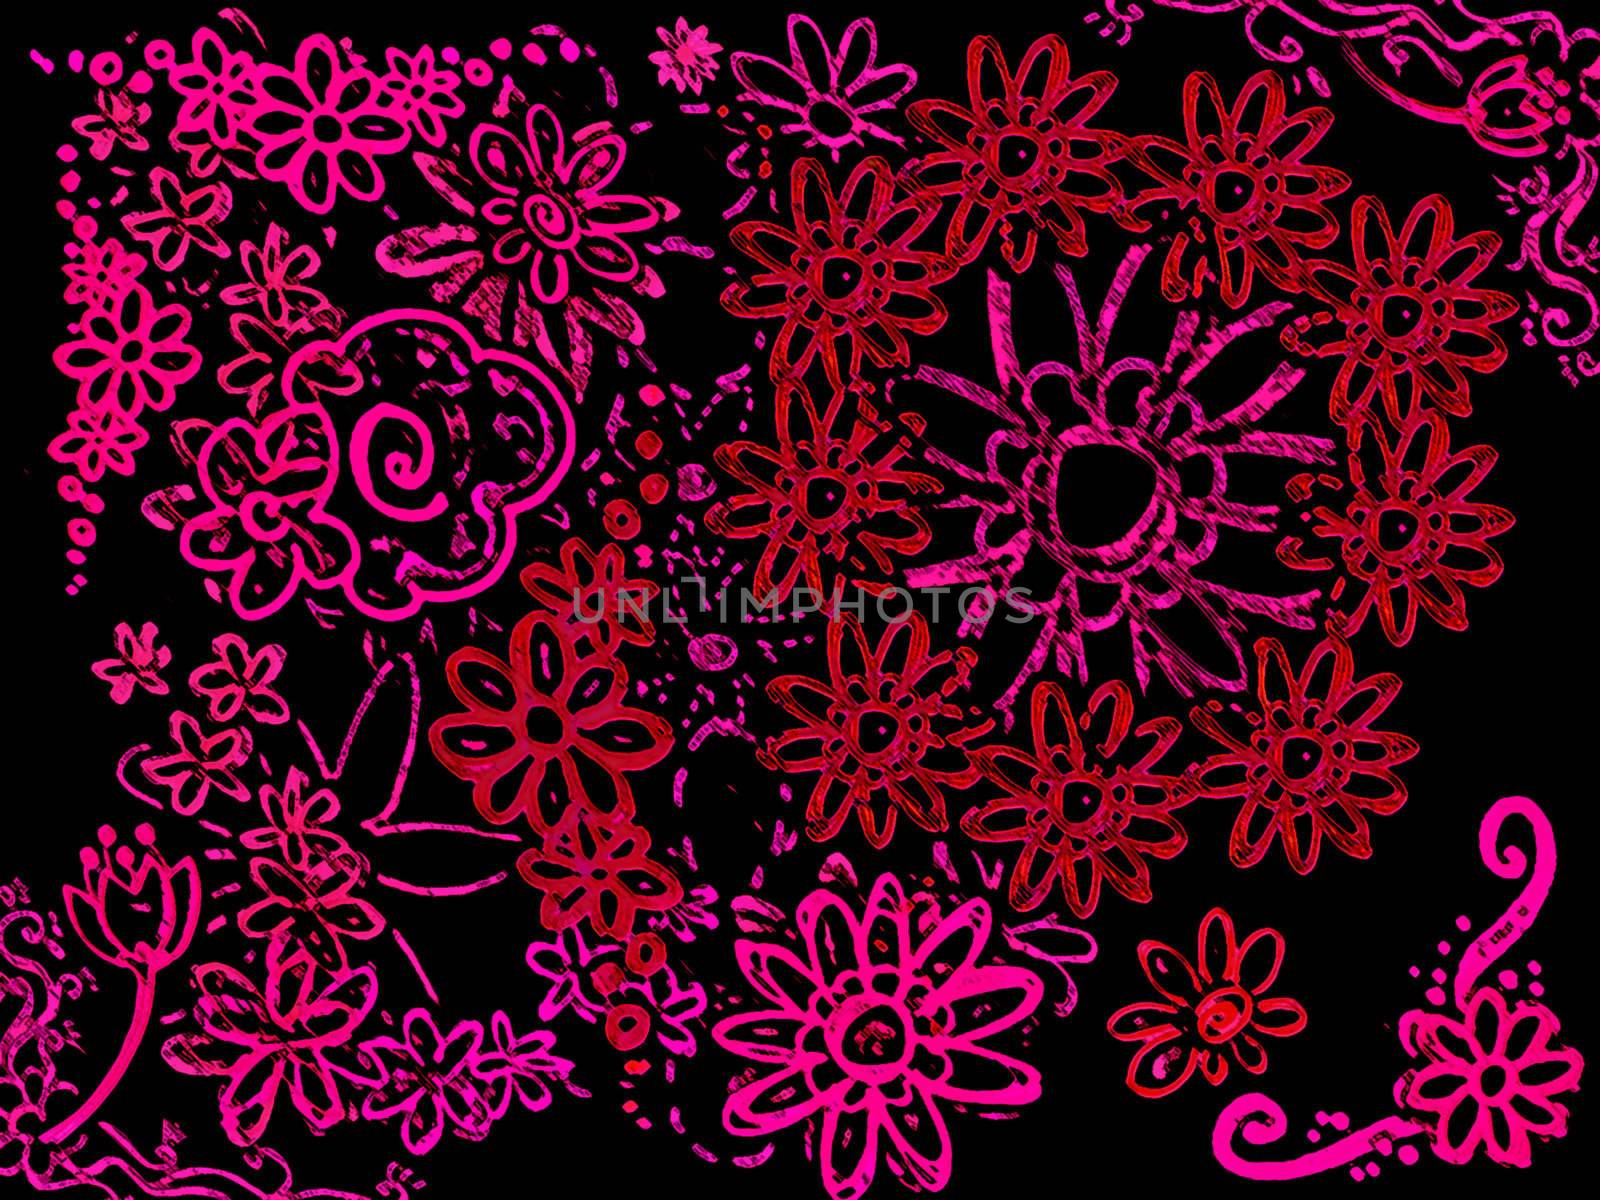 Neon Pink Various Flowers on Black by bobbigmac